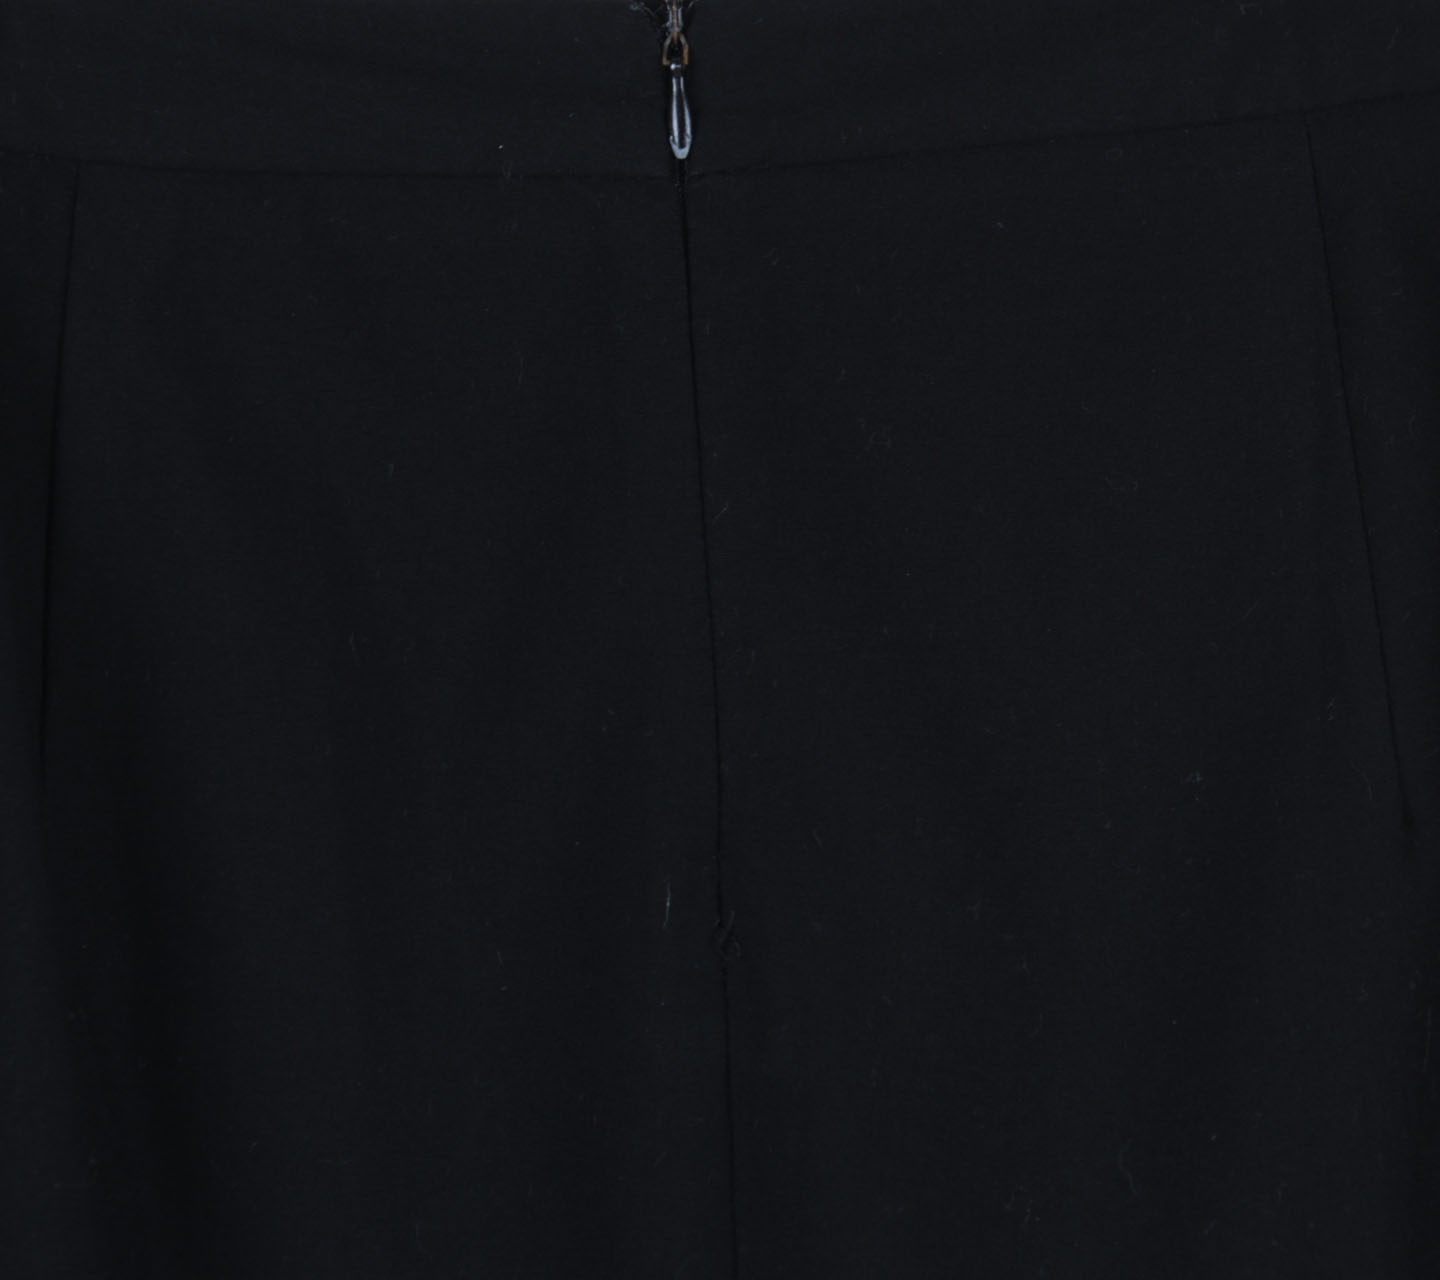 Zara Black Pencil Skirt